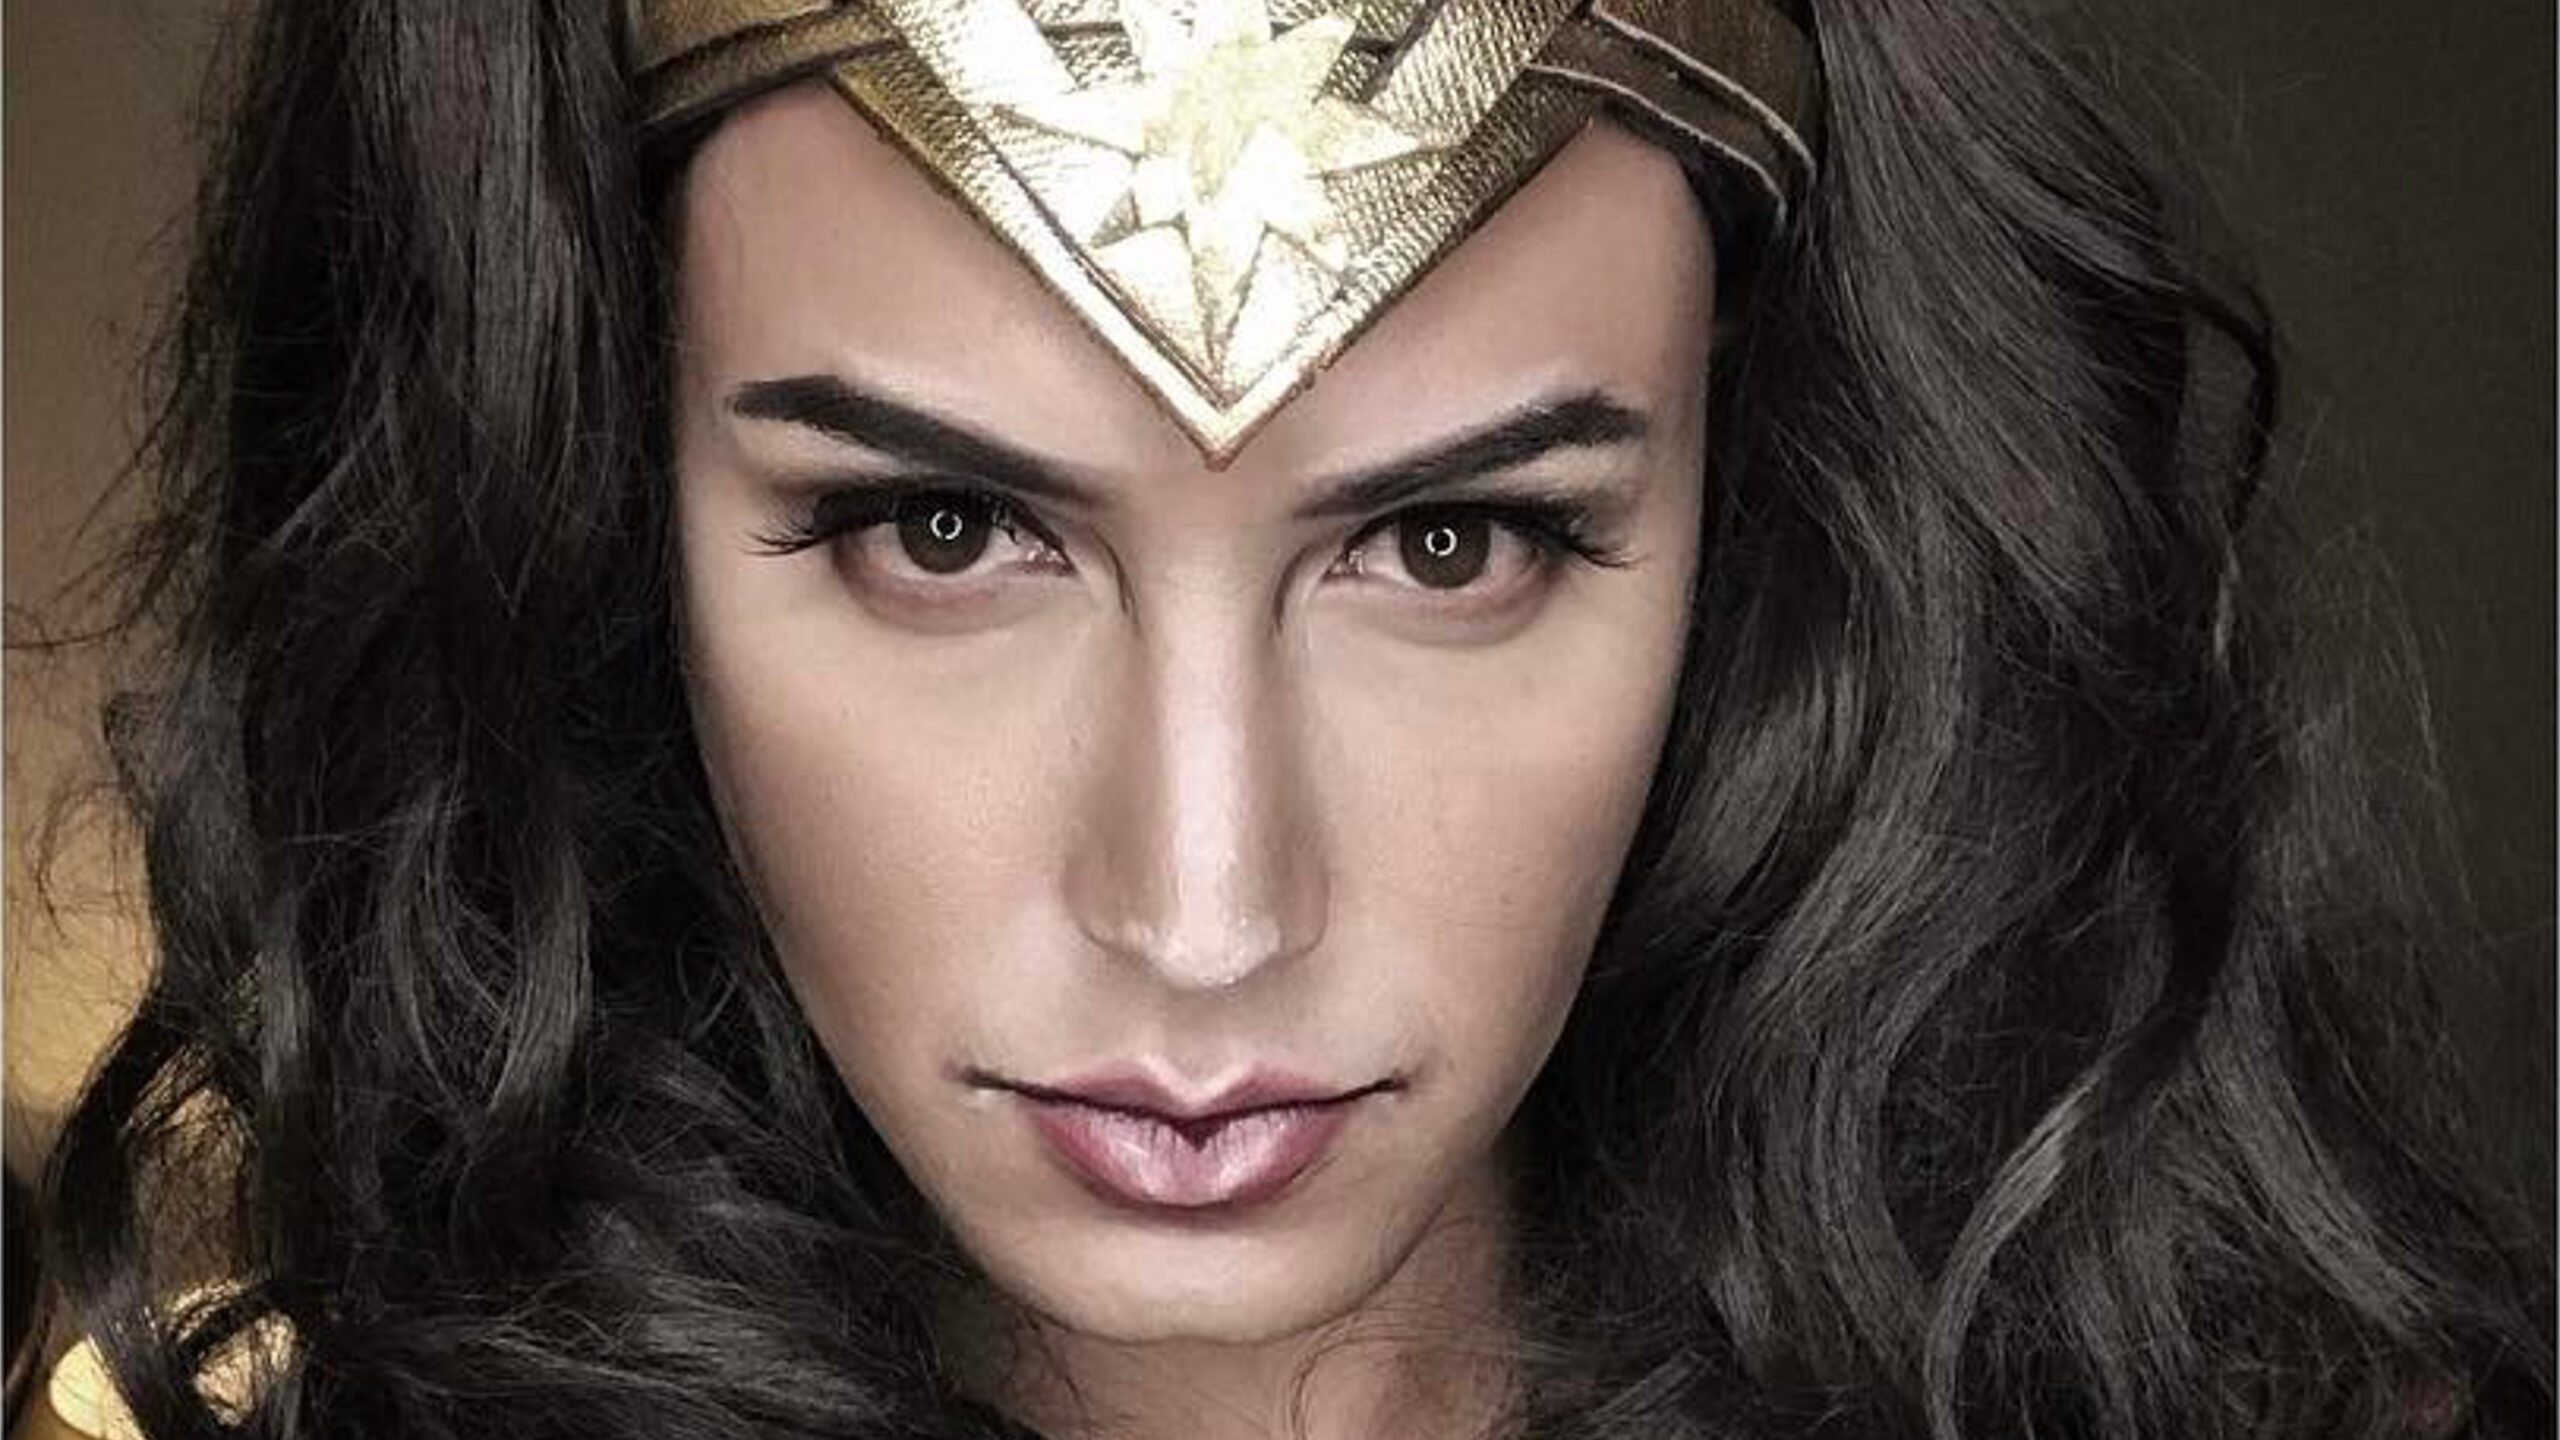 LOOK: Paolo Ballesteros transforms into Wonder Woman